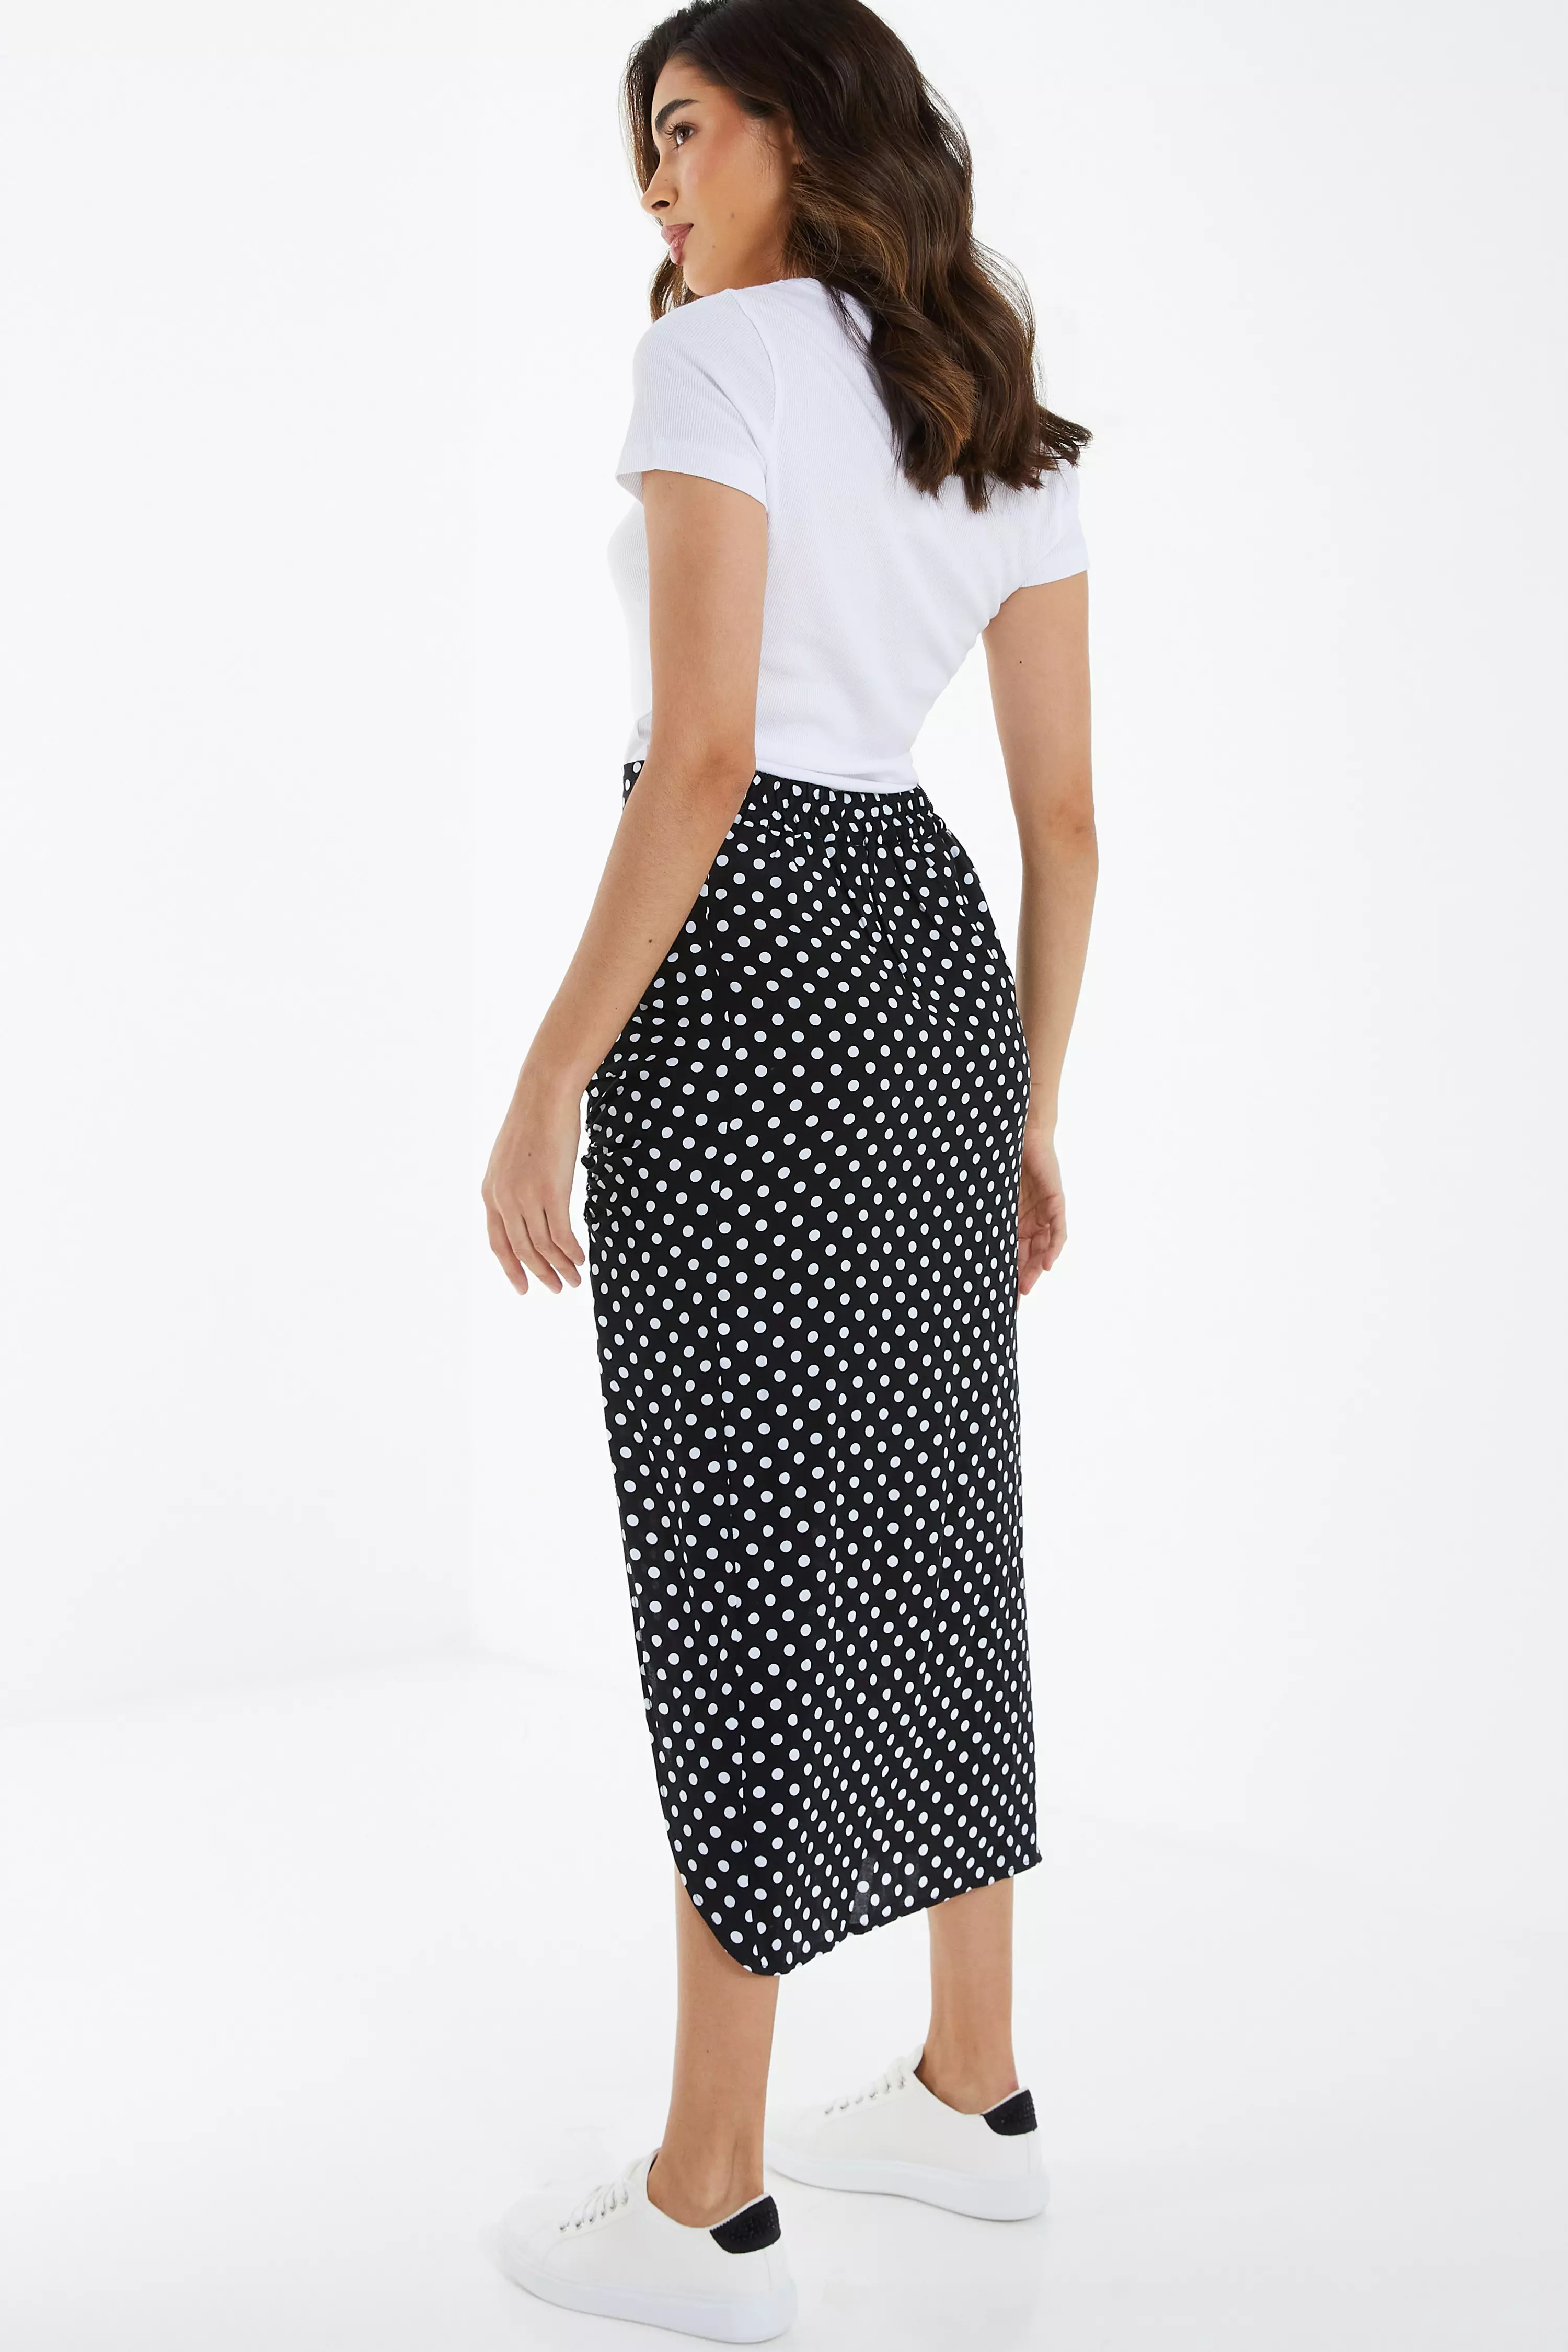 Black Polka Dot Ruched Midi Skirt